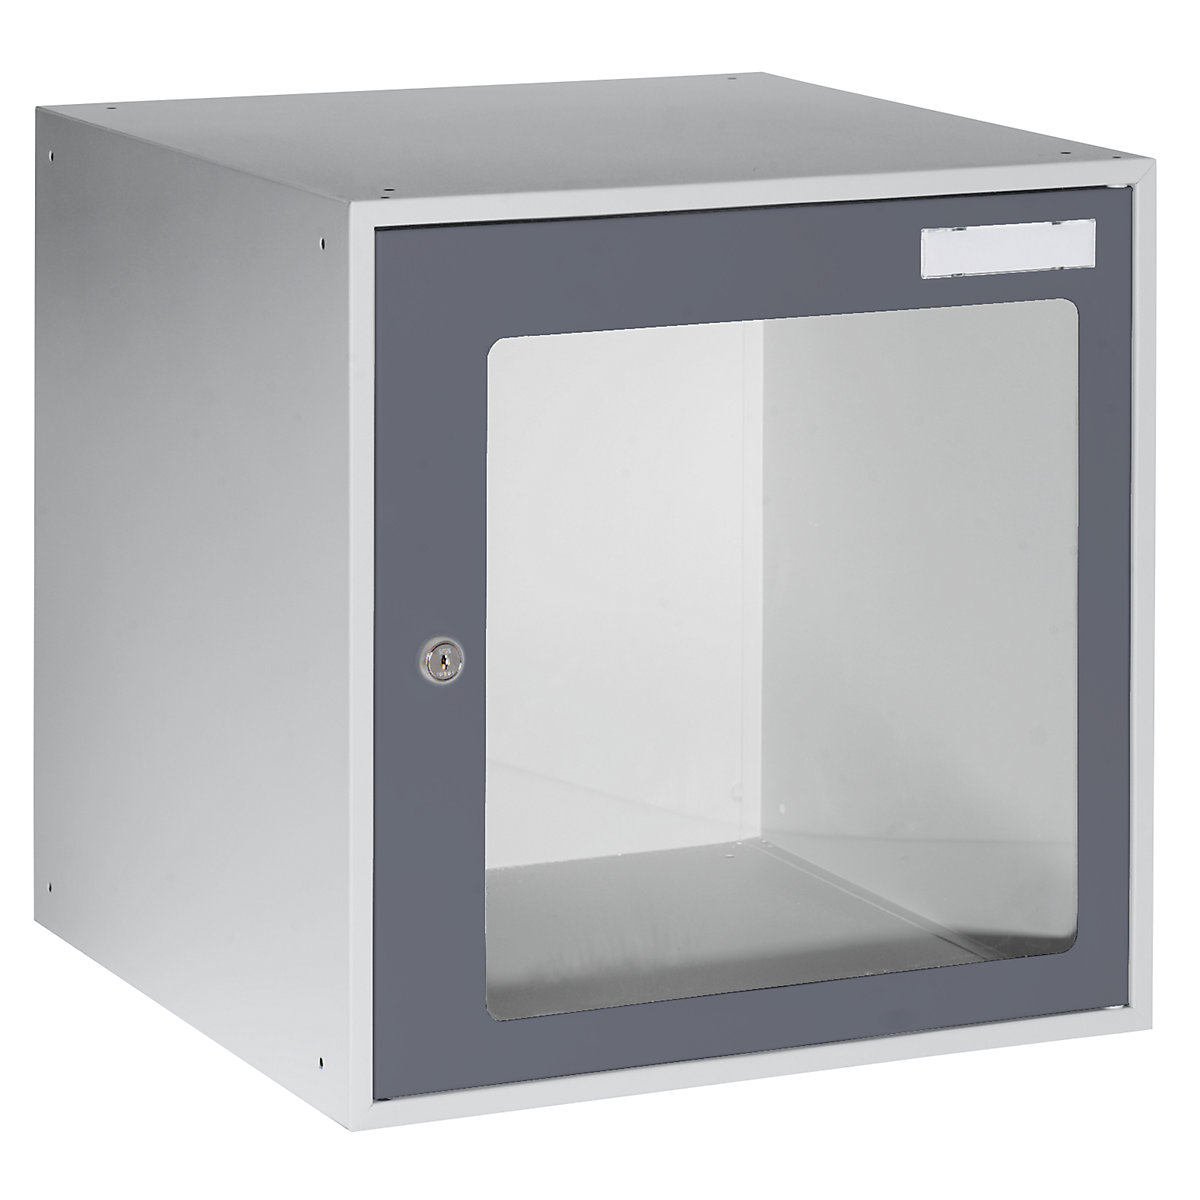 Cube lockers with vision panel – eurokraft basic, HxWxD 450 x 450 x 450 mm, door frame basalt grey RAL 7012-6